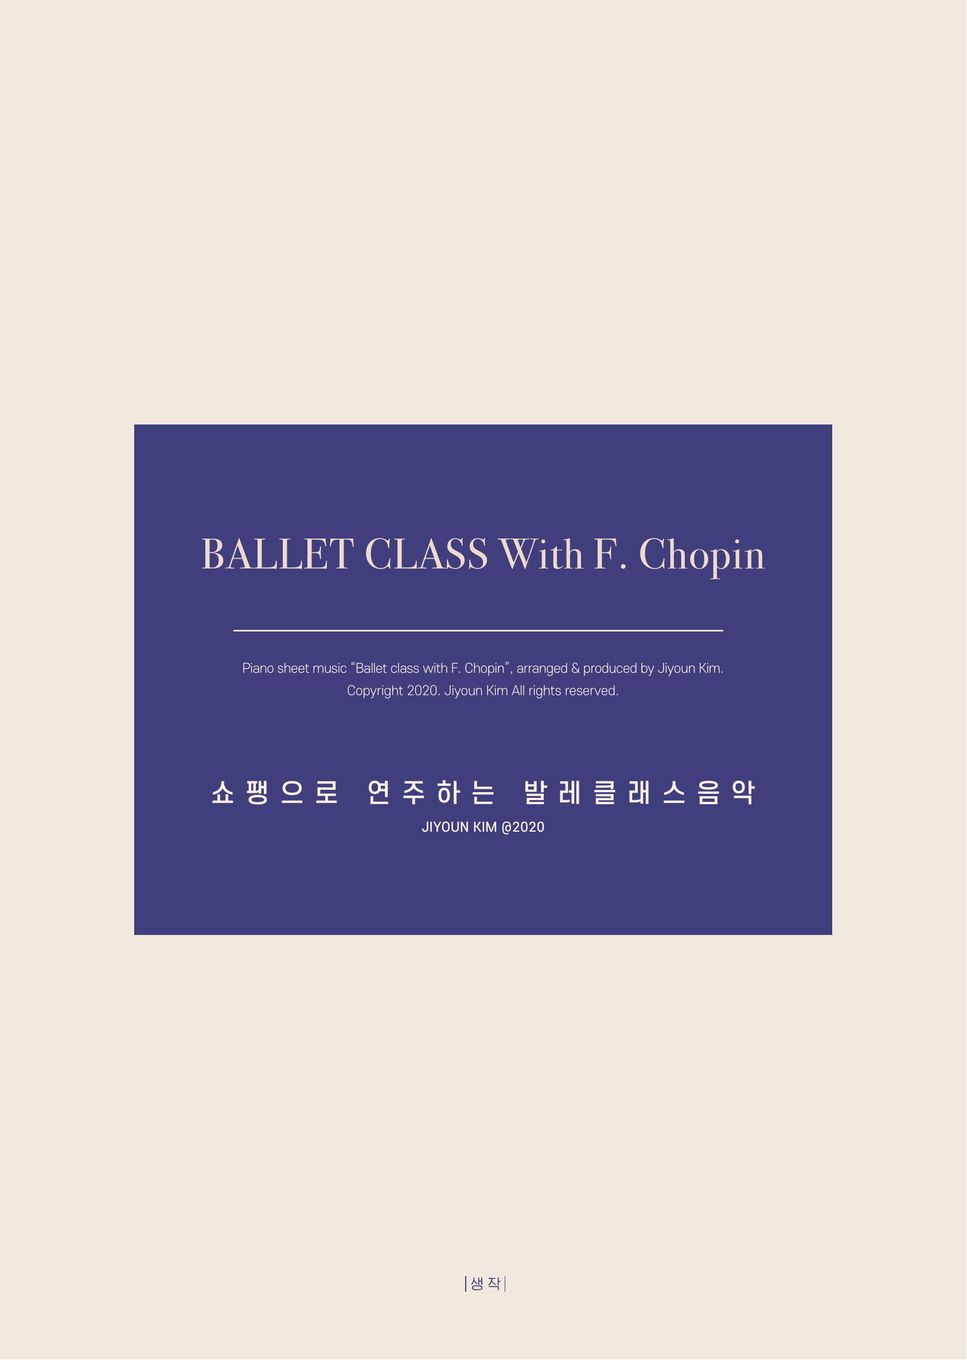 F. Chopin - Ballet Class with F. Chopin - 19. Waltz by Jiyoun KIM